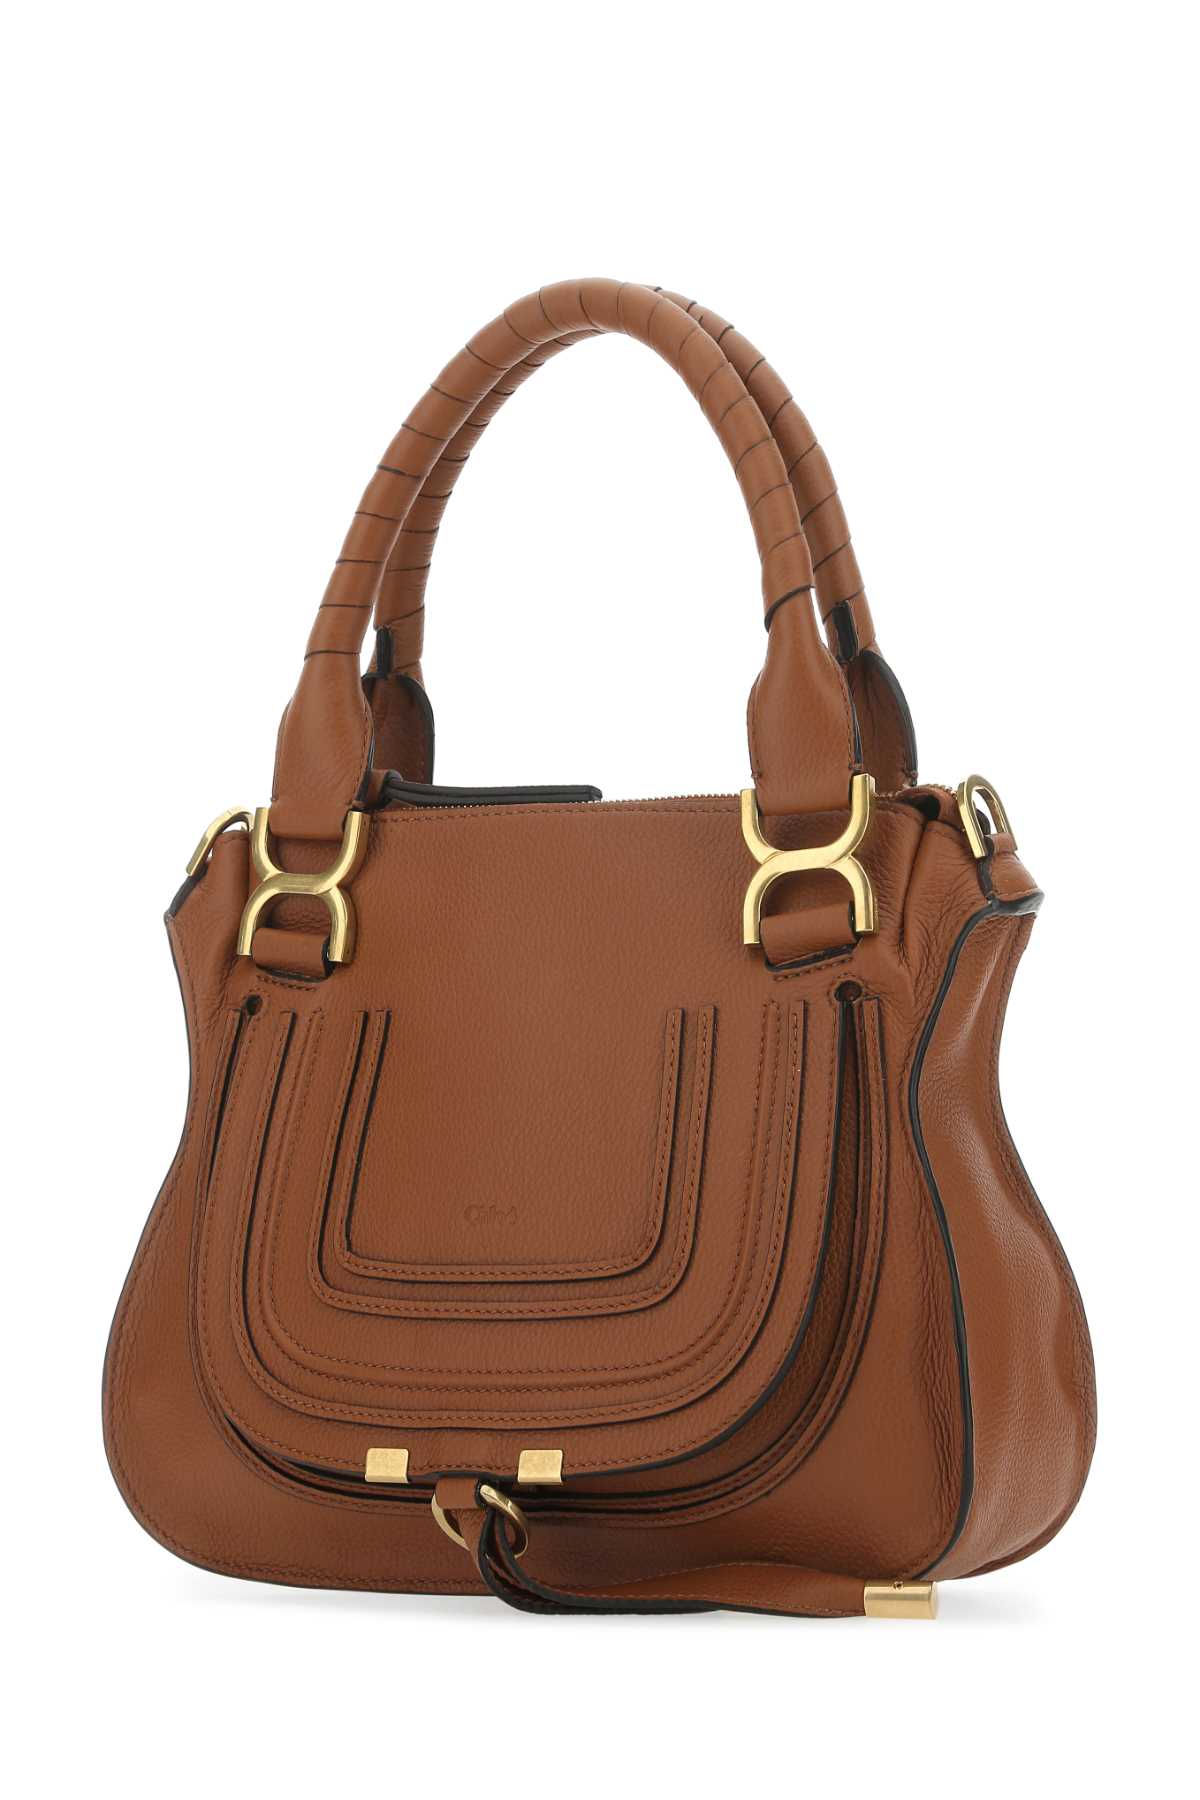 Chloé Brown Leather Small Marcie Handbag In 25m